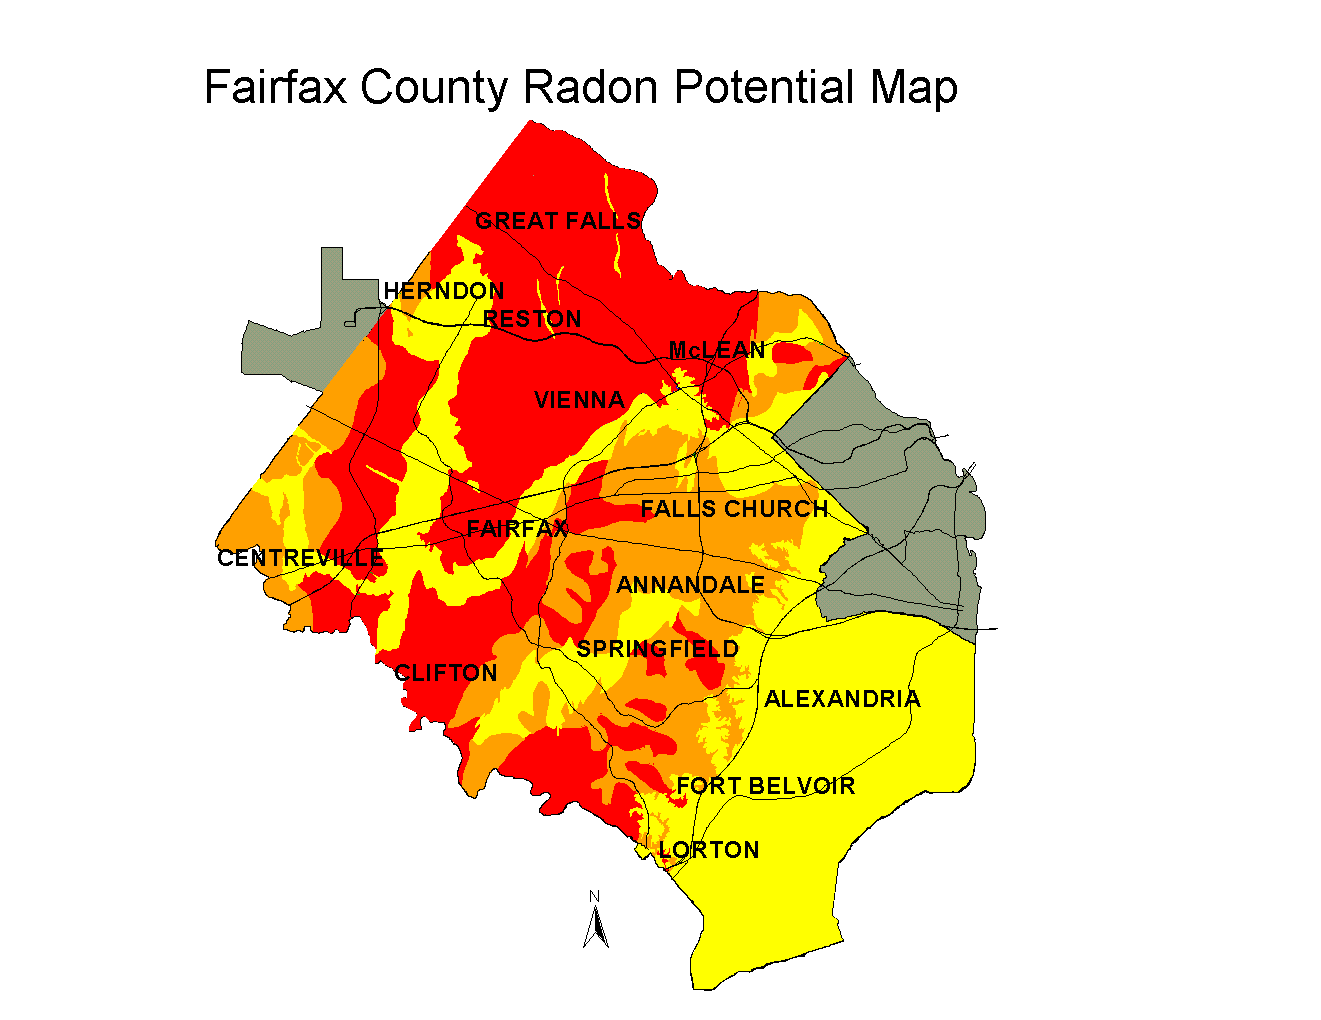 Fairfax County Radon Potential Map